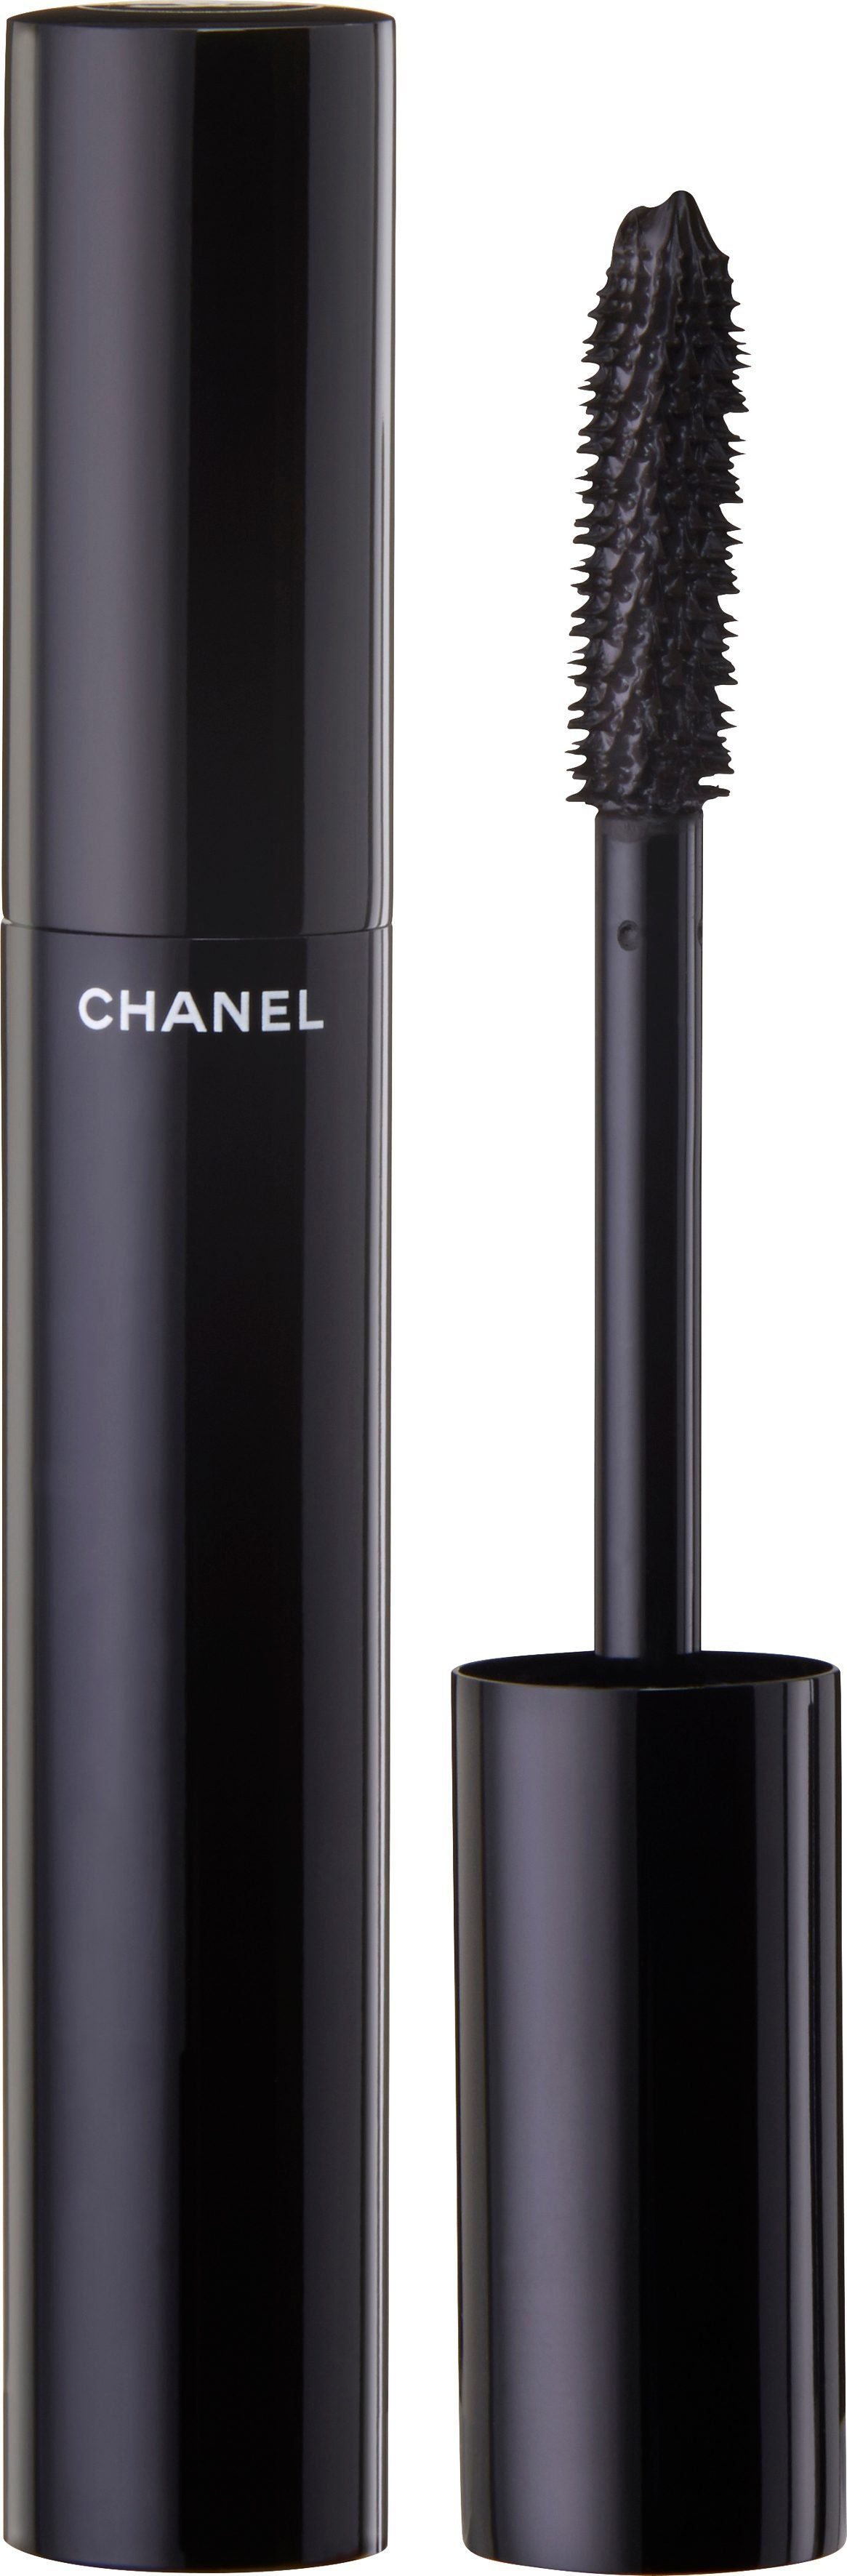 CHANEL Mascara Le Volume de Chanel, Innovative Bürste